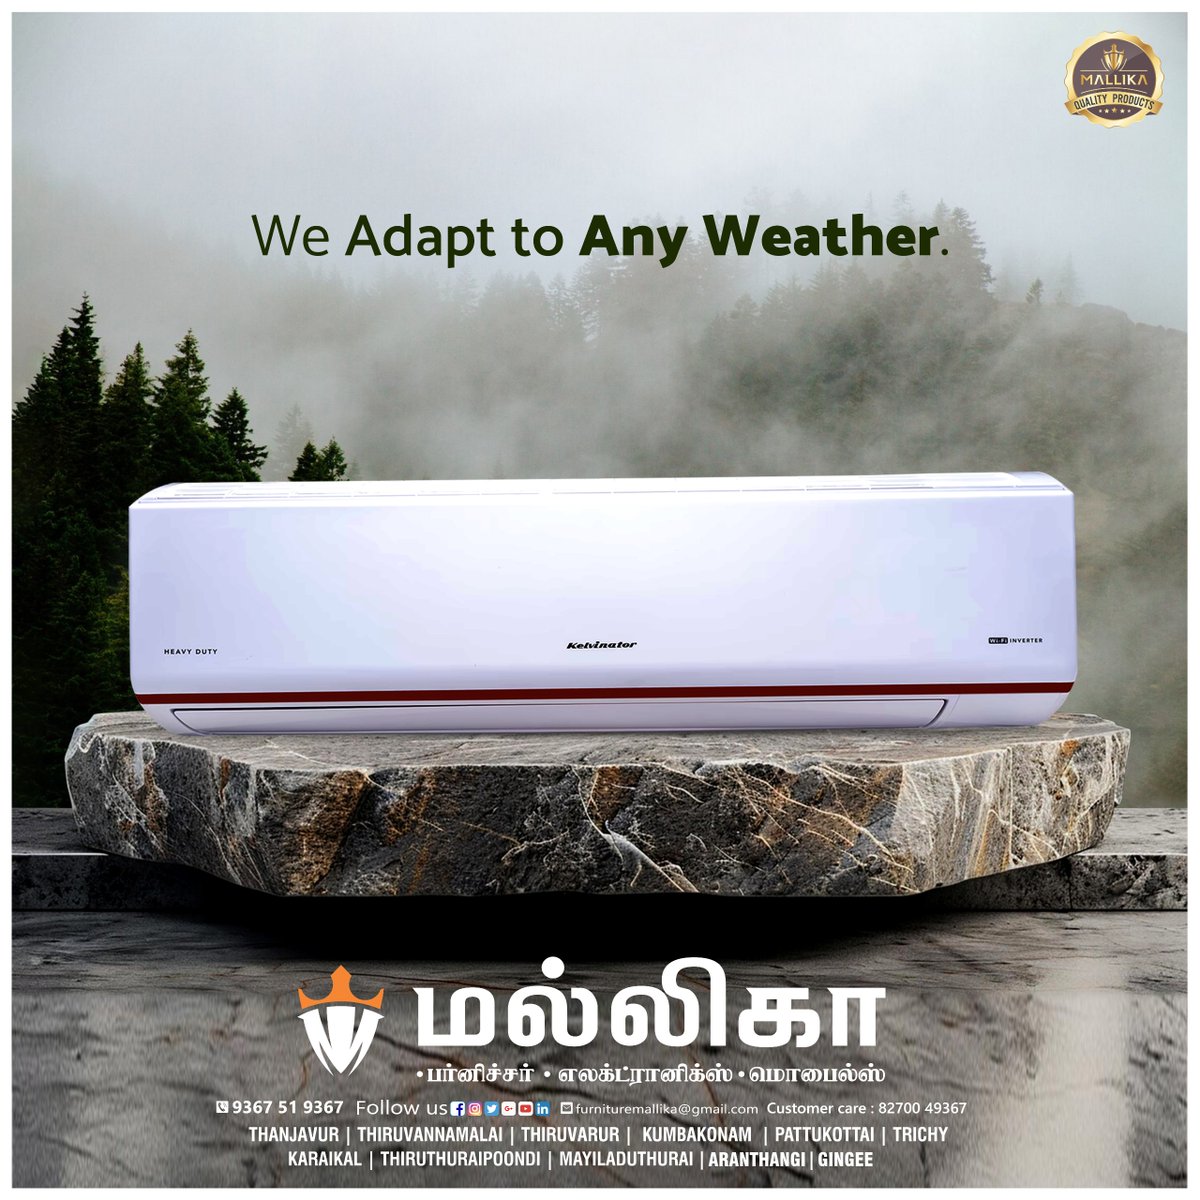 We Adapt to Any Weather...
#airconditioners 
Manam Sollumae Mallika
Mallika Furniture, Electronics & Mobiles
82700 49367
9367 51 9367
THANJAVUR | THIRUVANNAMALAI | THIRUVARUR | KUMBAKONAM | PATTUKOTTAI | TRICHY | KARAIKAL | THIRUTHURAIPOONDI | MAYILADUTHURAI | ARANTHANGI | GINGEE